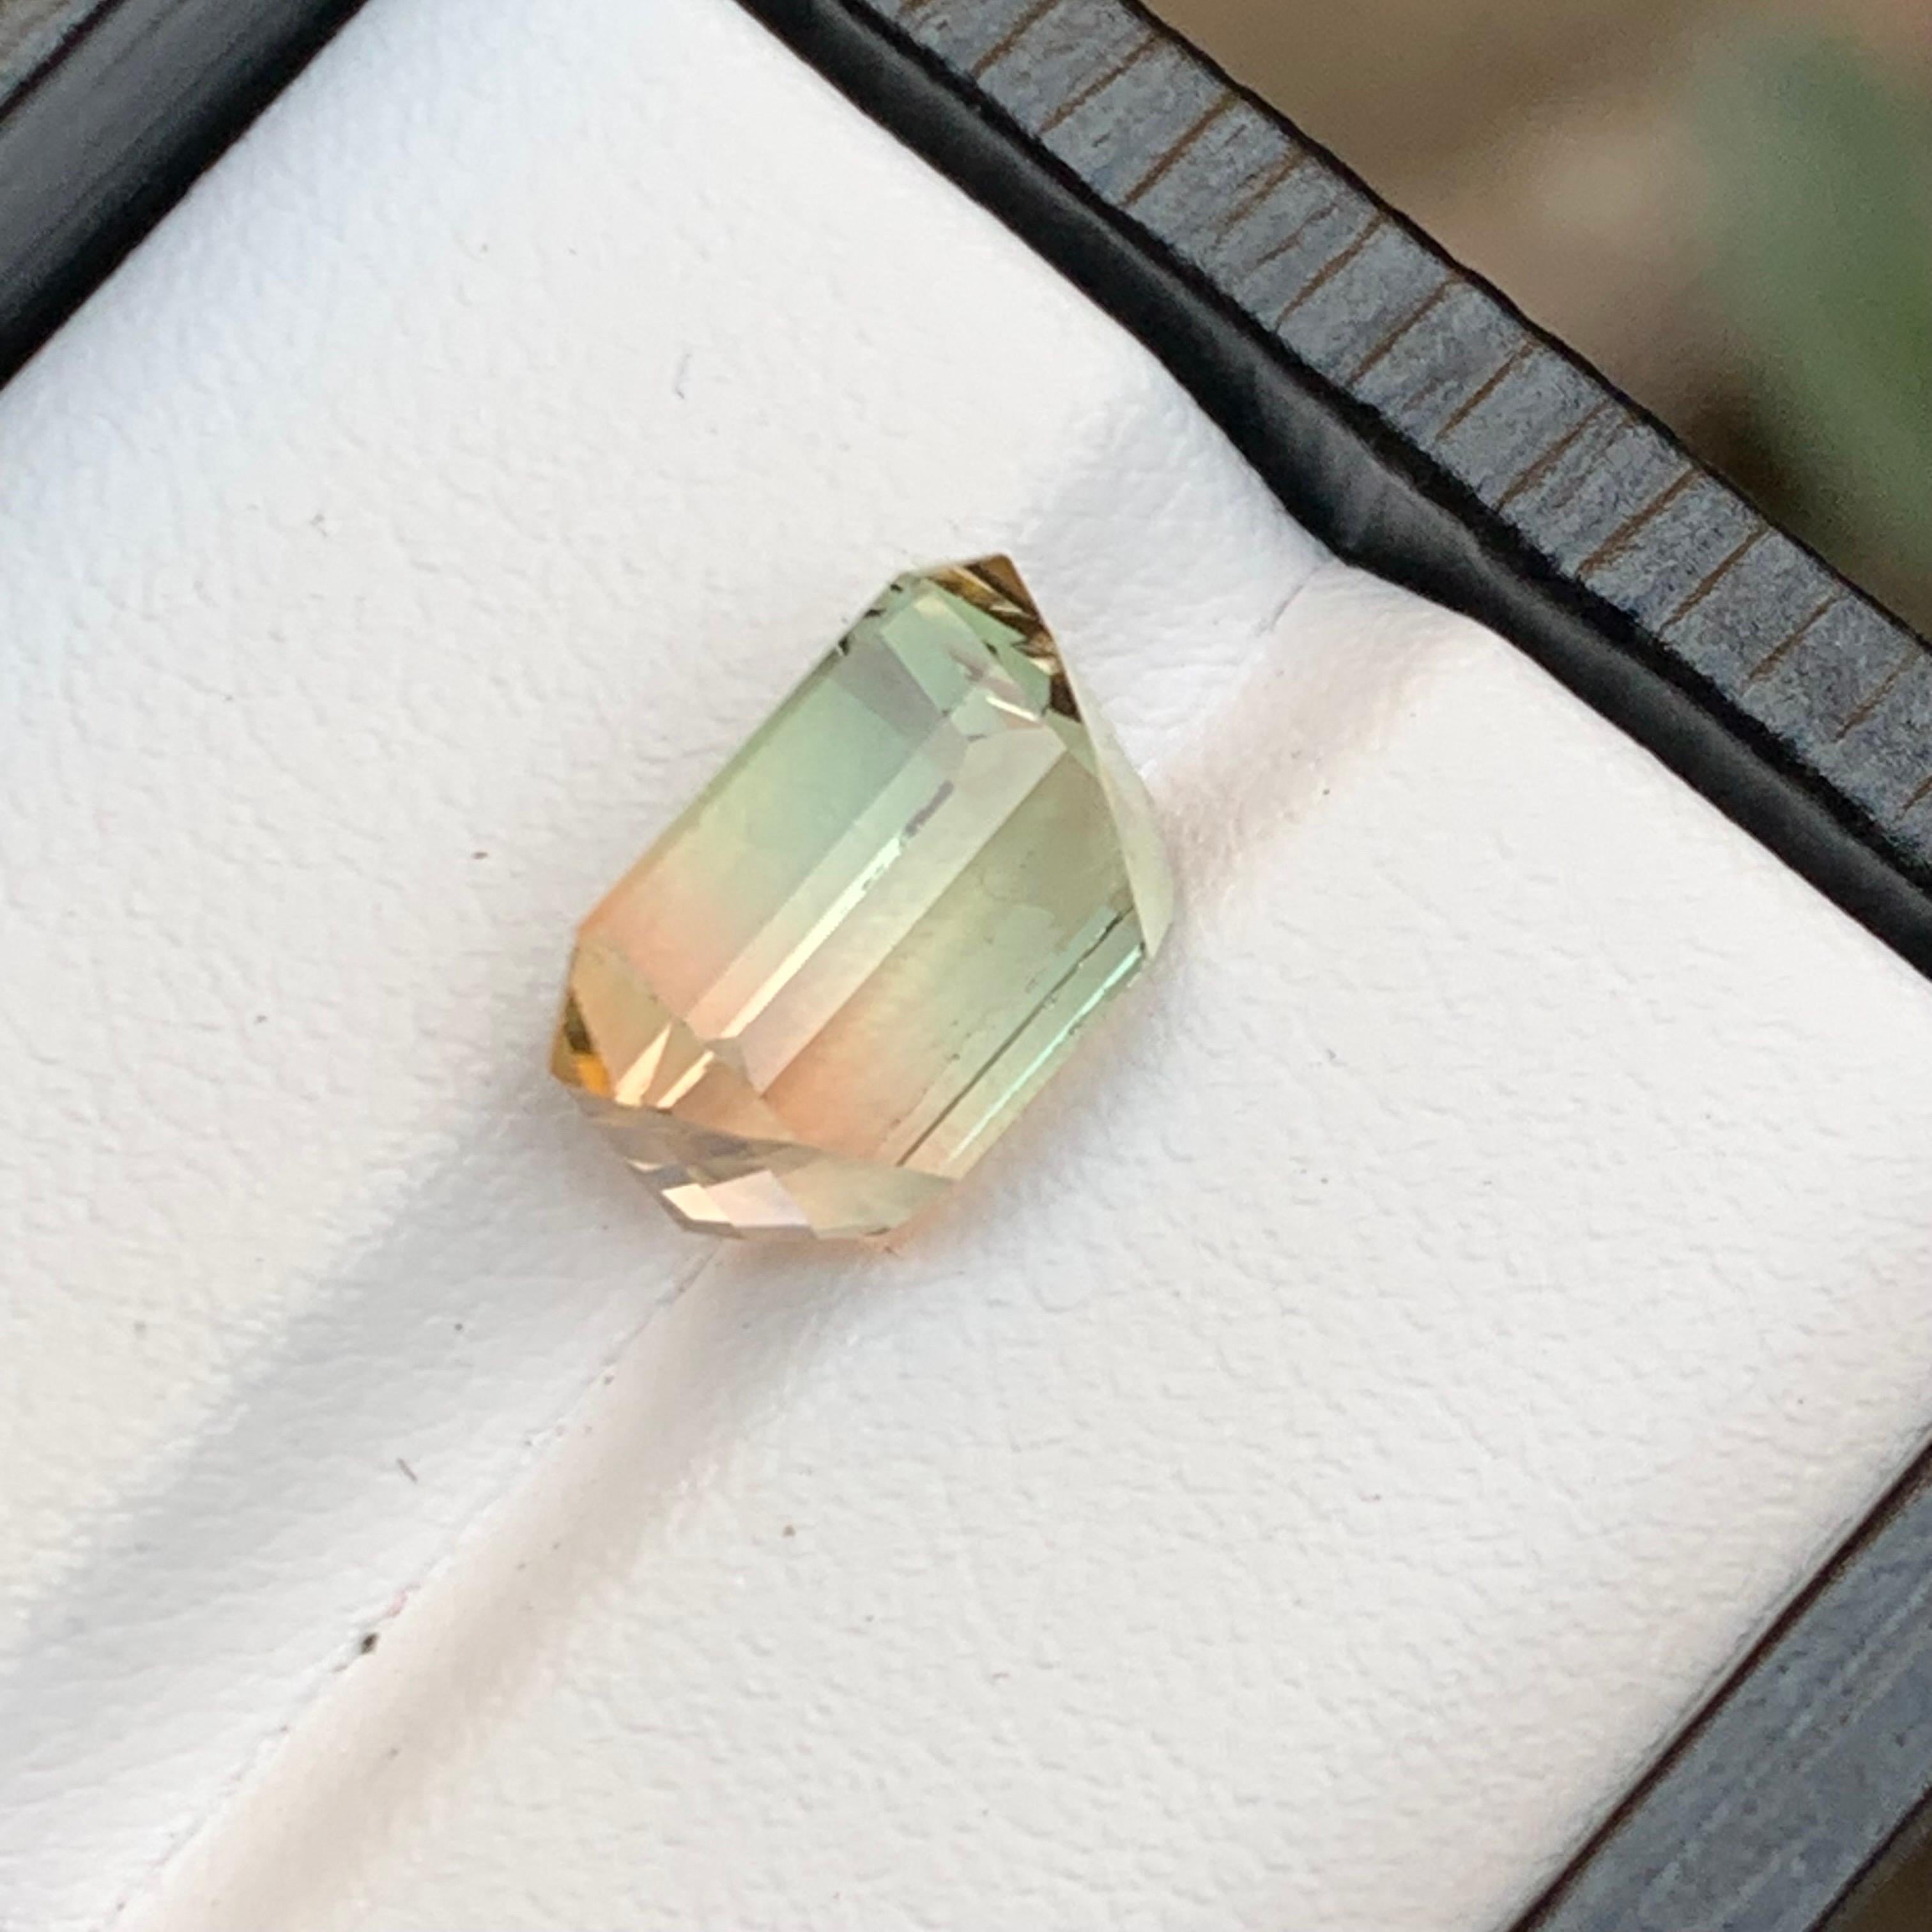 Contemporary Rare Bicolor Natural Tourmaline Loose Gemstone, 5.80 Carat-Emerald/Octagon Cut For Sale